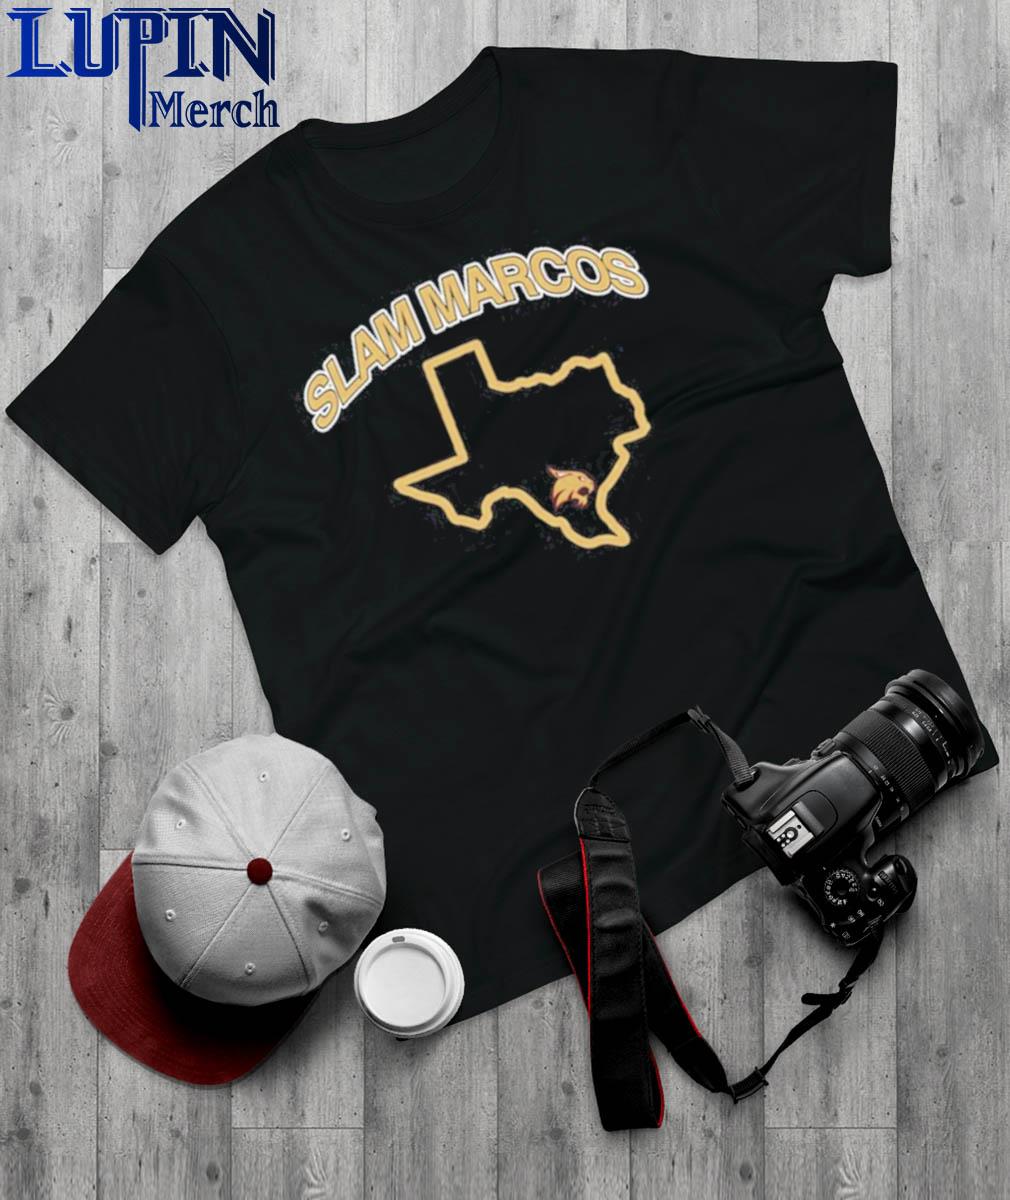 Dallas Stars Levelwear Hockey Fights Cancer Richmond T Shirt